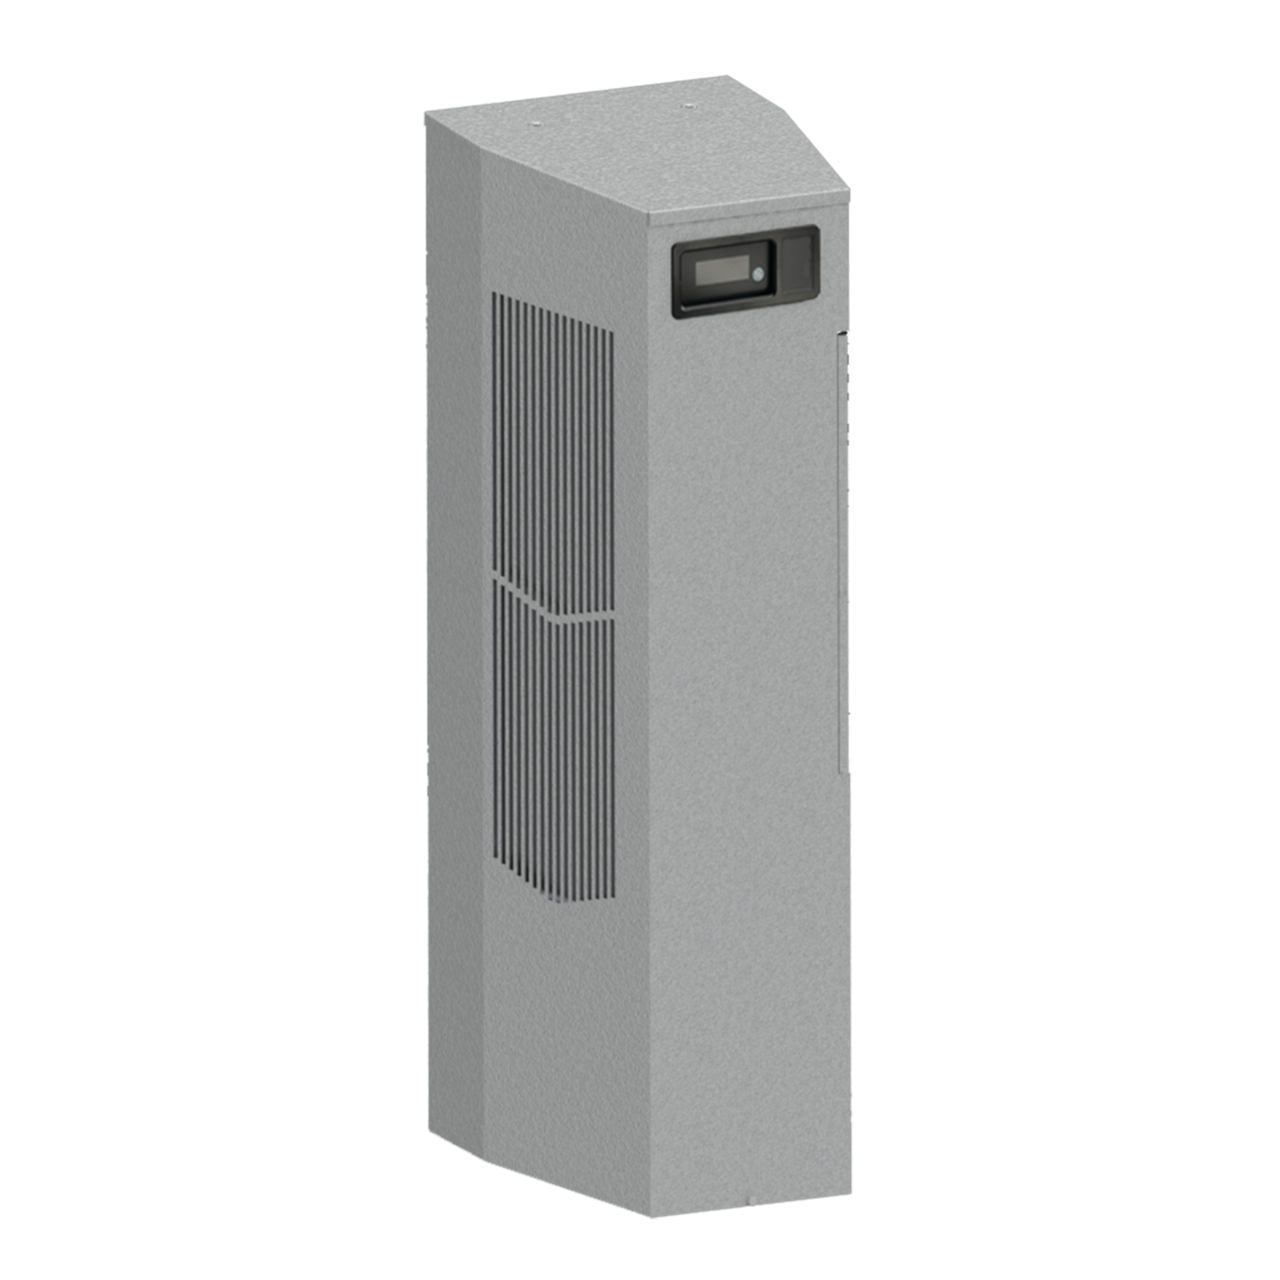 nVent HOFFMAN Spectracool™ N360646G100 MCL Indoor/Outdoor Enclosure Air Conditioner, 460 VAC, 1.59/1.69 A, 50/60 Hz, NEMA 3R/4/12 Enclosure, 6000 Btu/hr